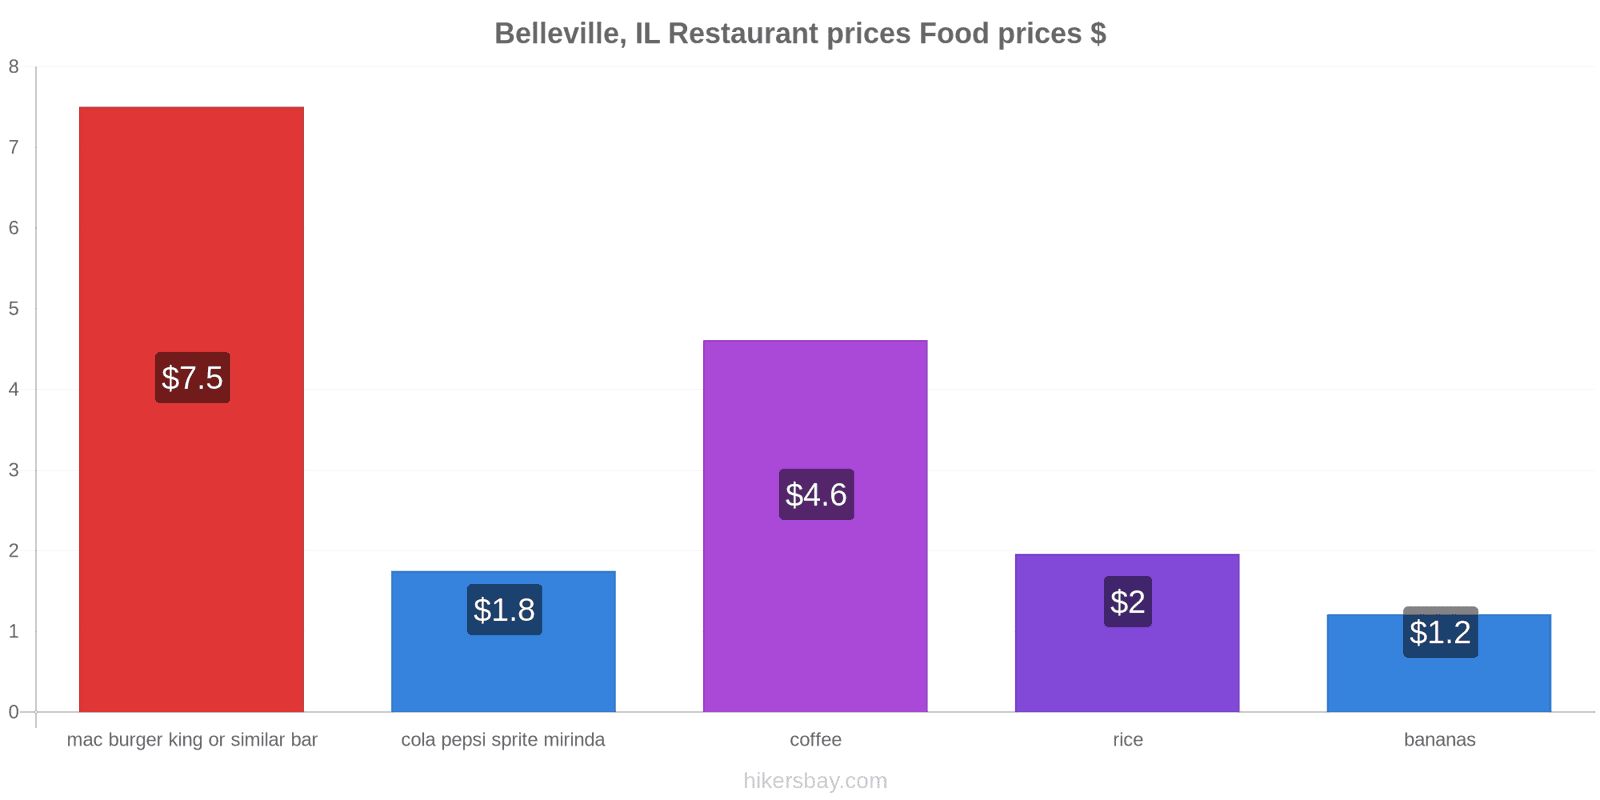 Belleville, IL price changes hikersbay.com